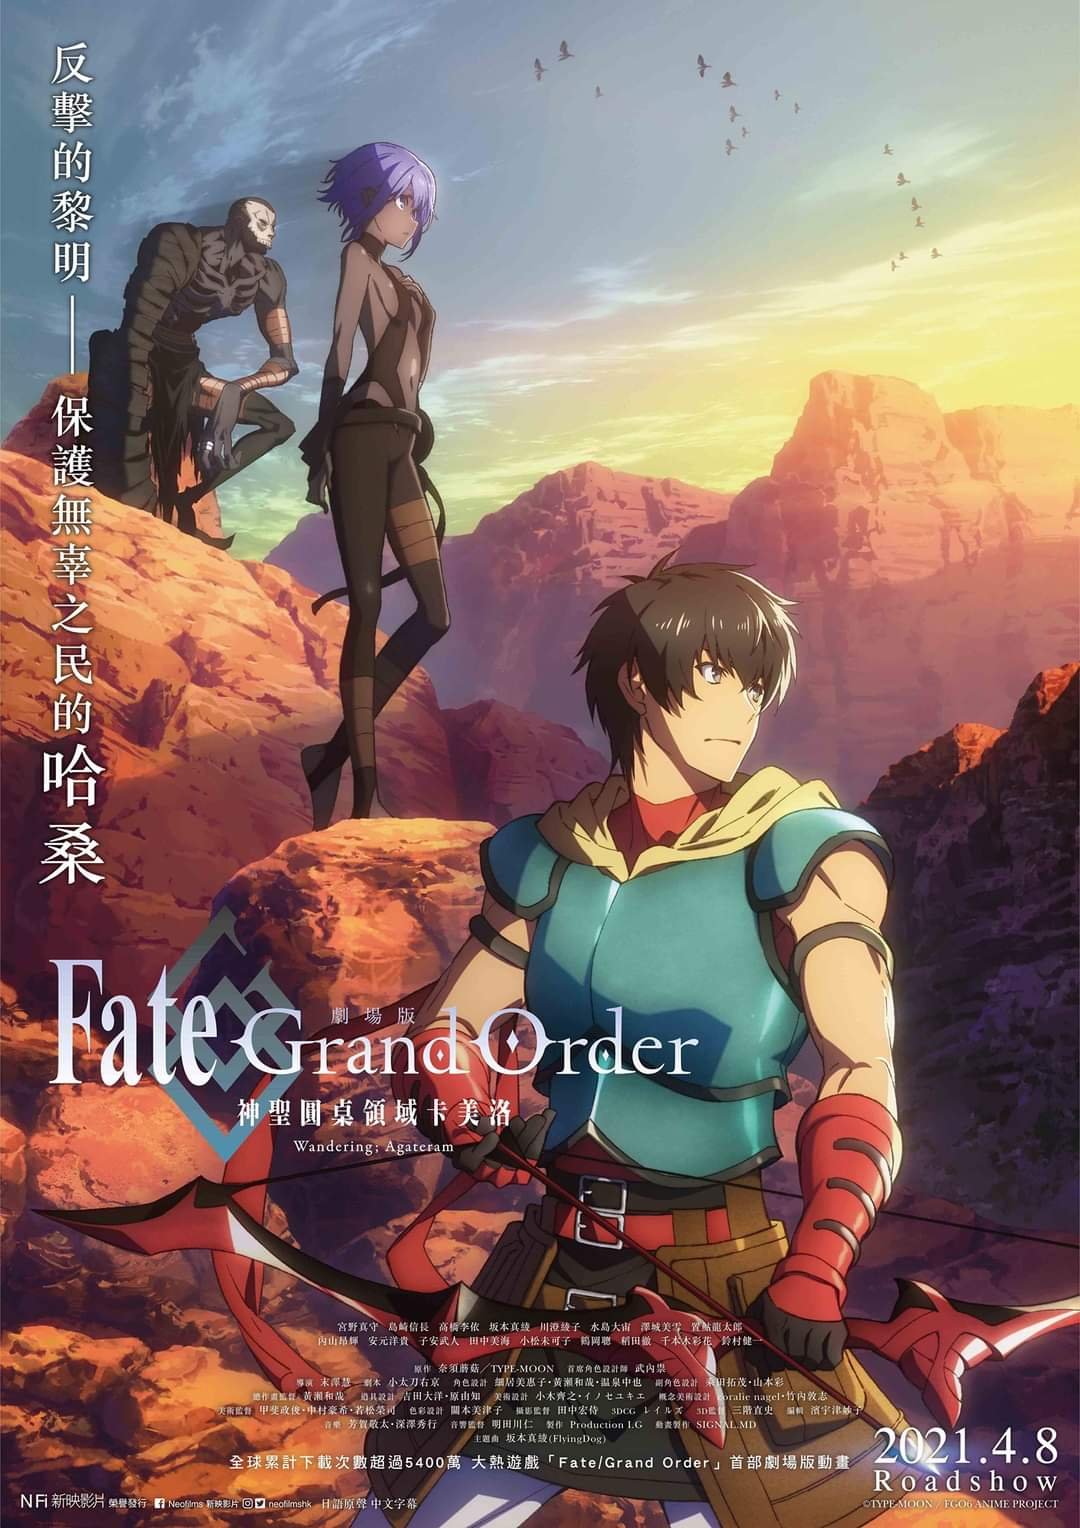 Fate/Grand Order-神聖圓桌領域卡美洛-Wandering; Agateram電影圖片 - FB_IMG_1617438146966_1617598856.jpg